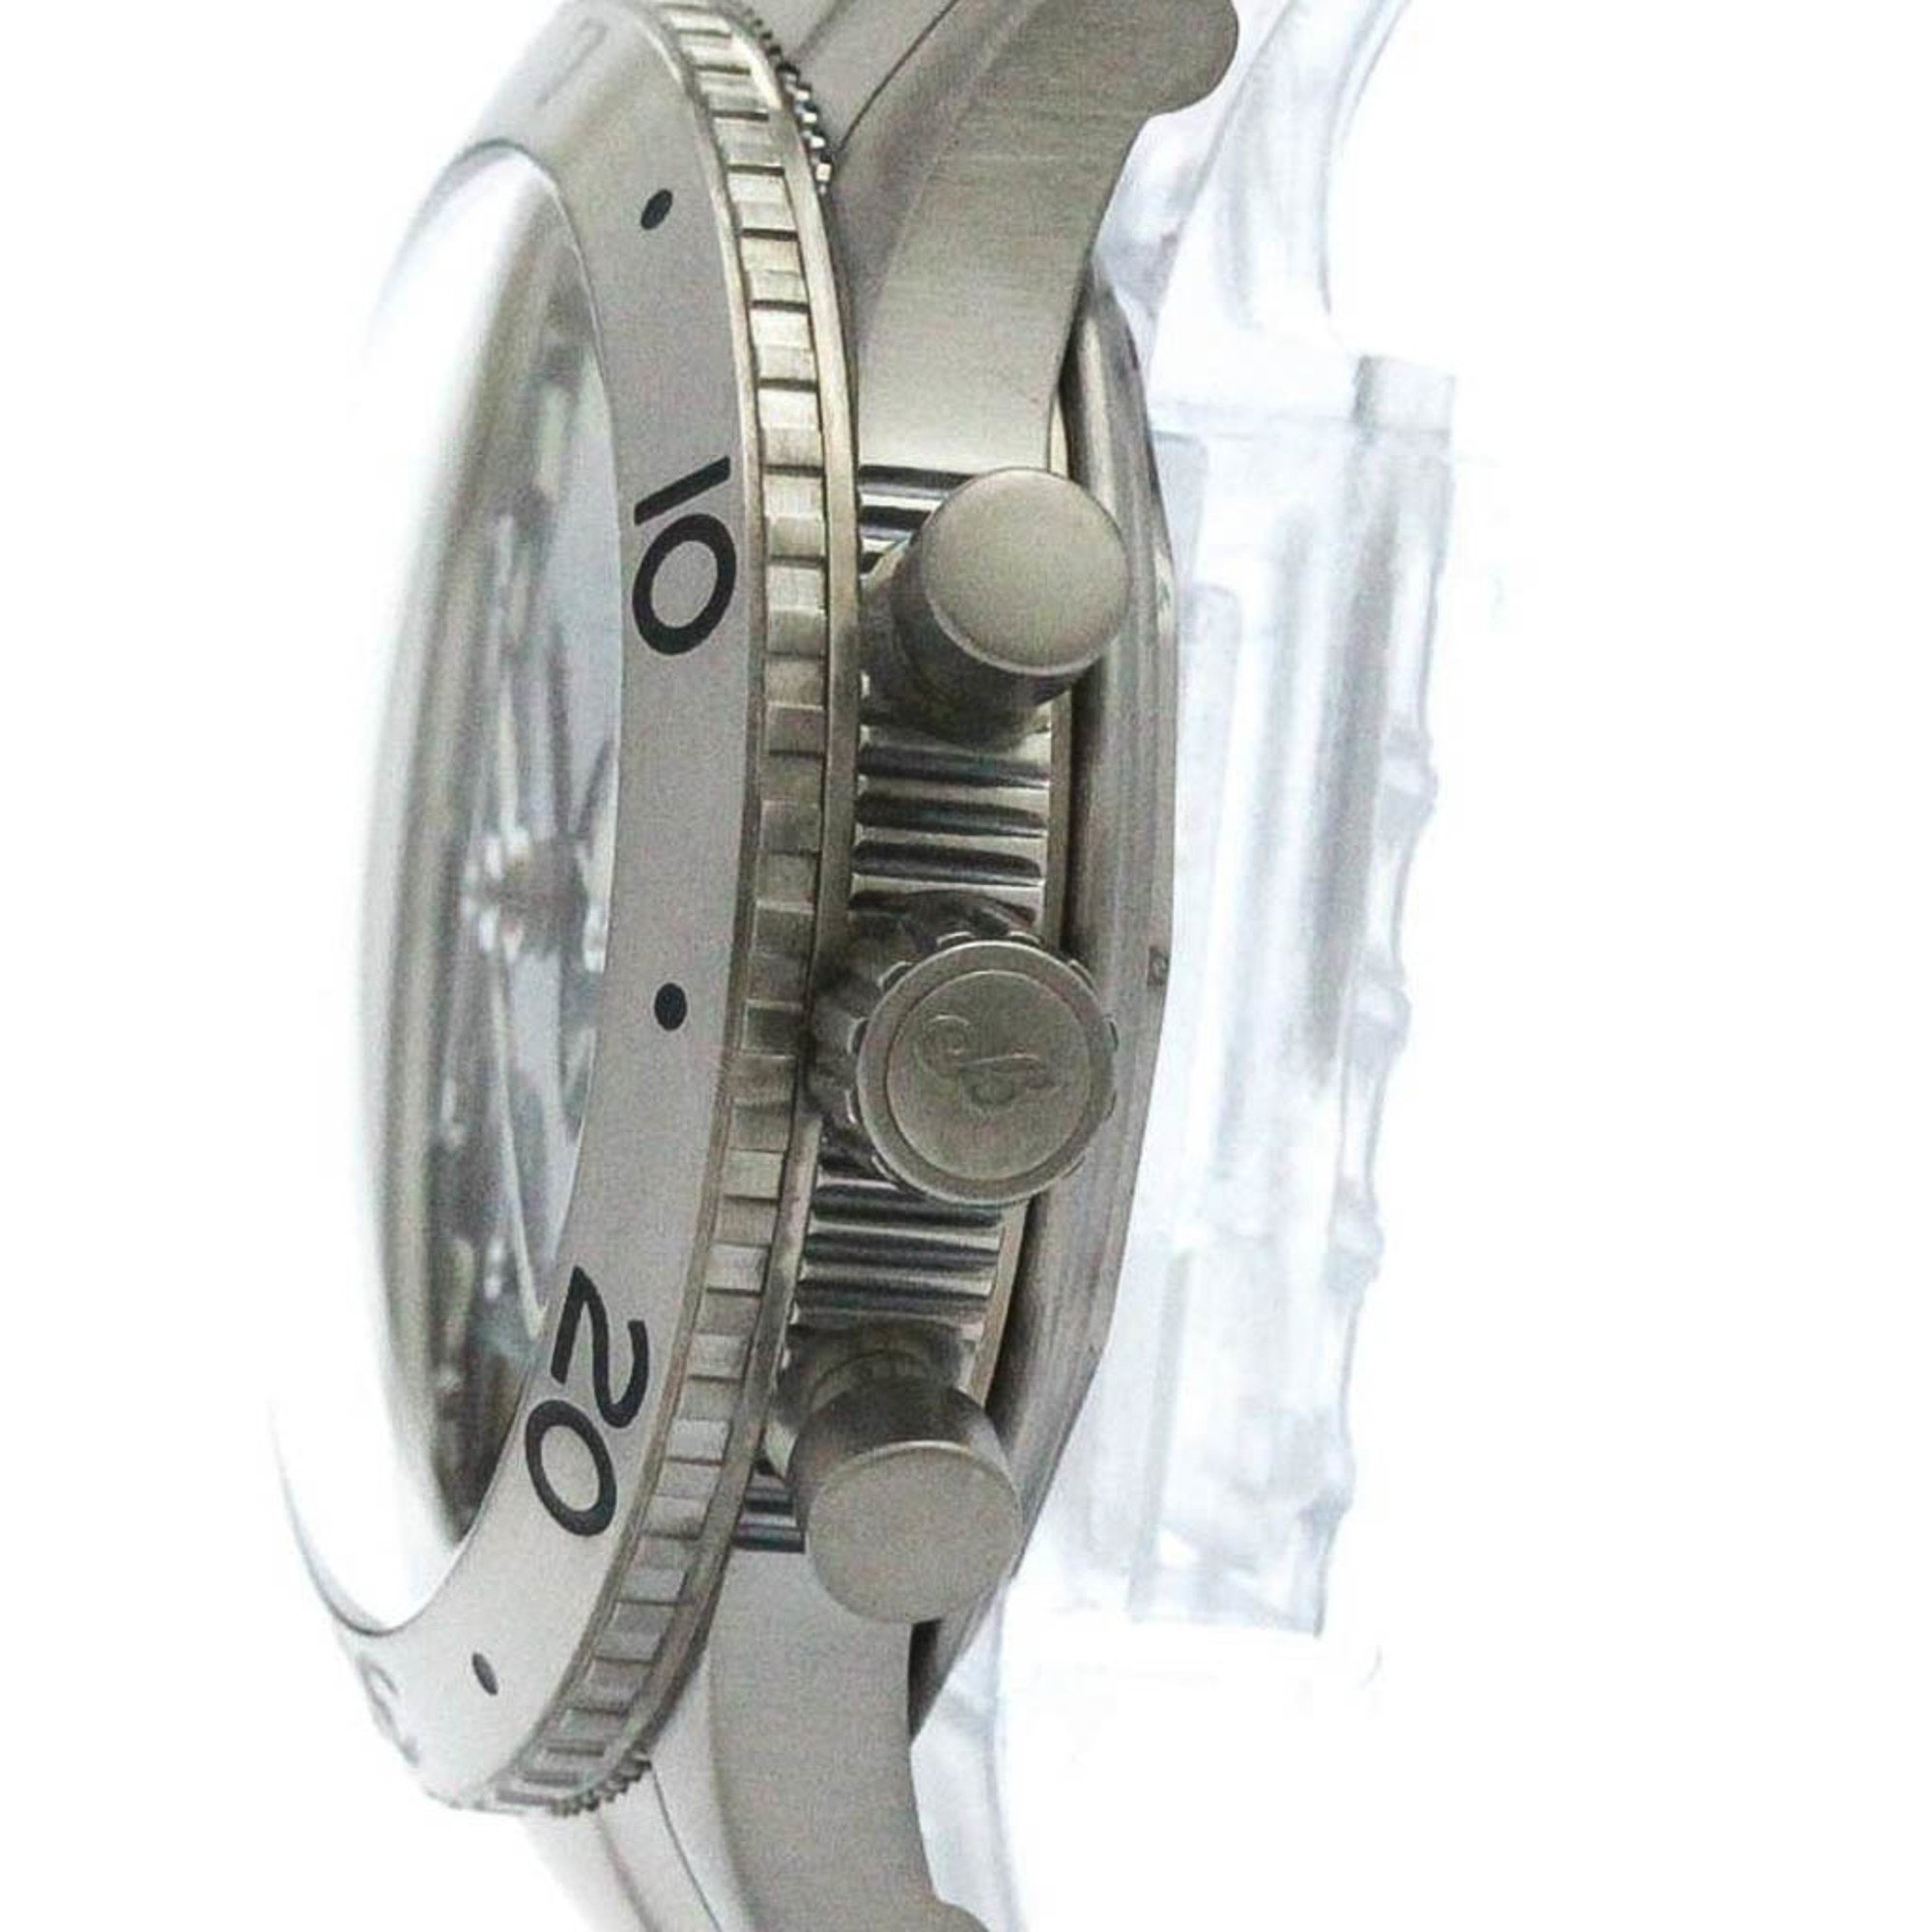 Polished BREGUET Transatlantique Type XX Titanium Automatic Watch 3820TI BF571608